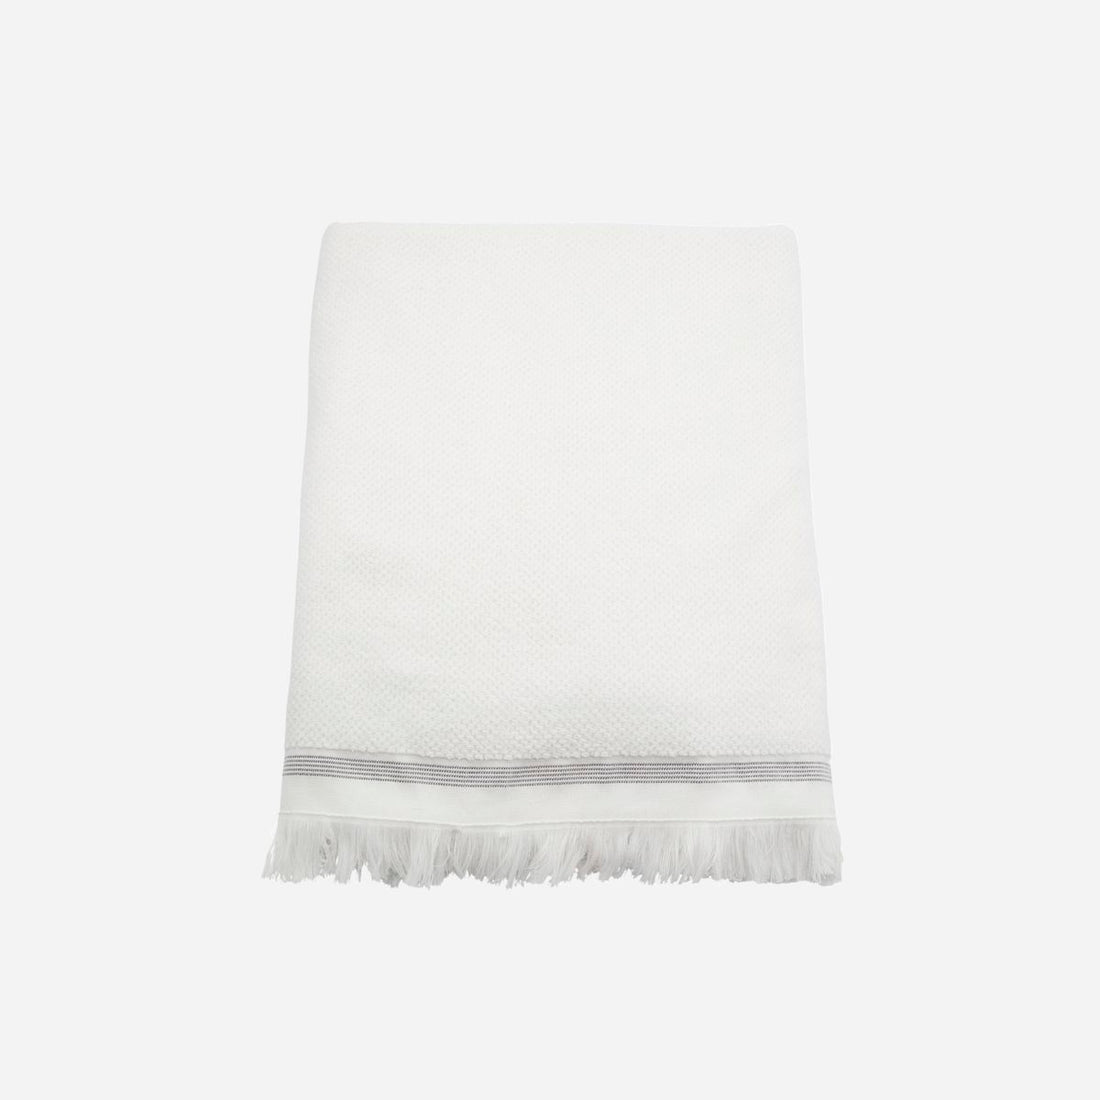 Meraki-Håndklæde, 100x180 cm, Hvid med grå striber-l: 100 cm, w: 180 cm